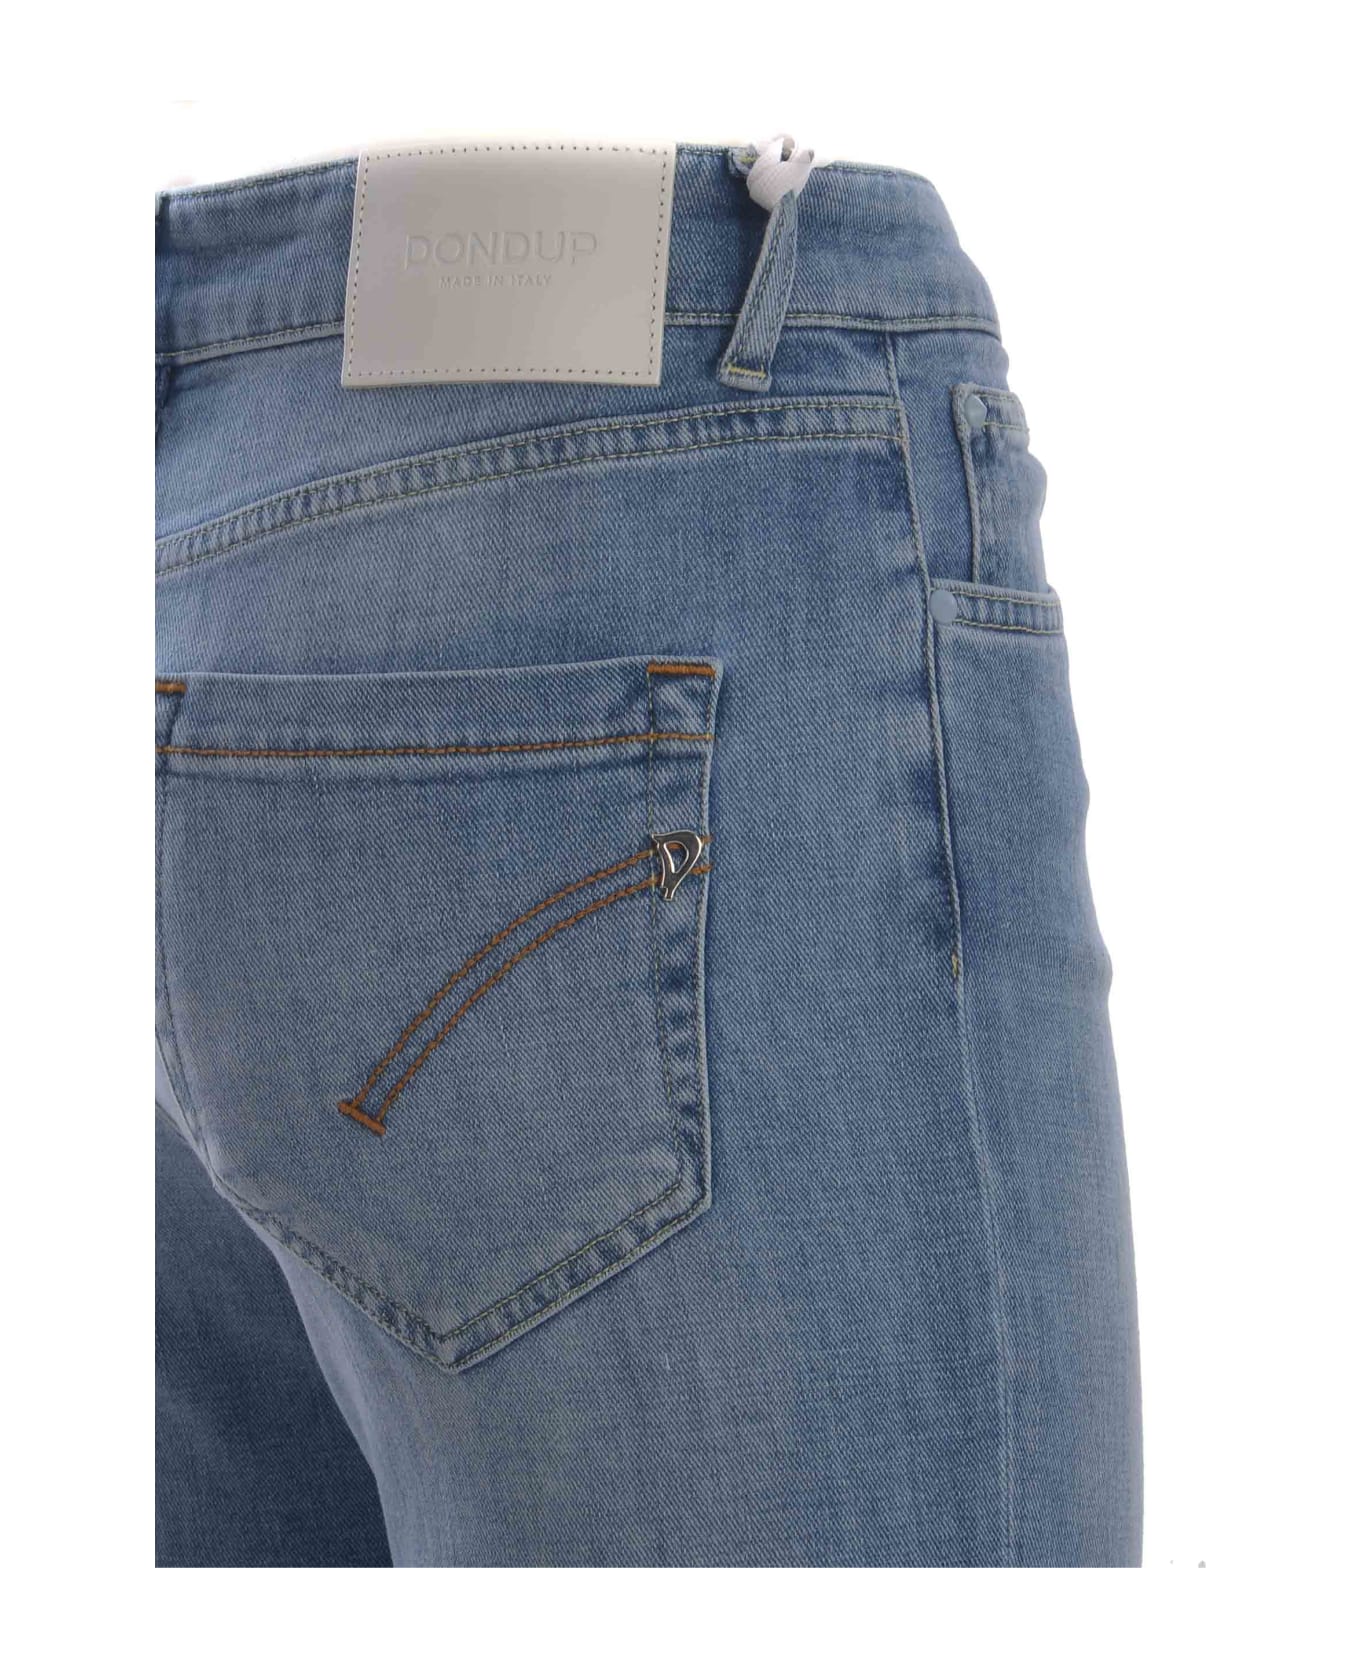 Dondup Jeans Dondup "koons" Made Of Denim - Denim azzurro chiaro デニム